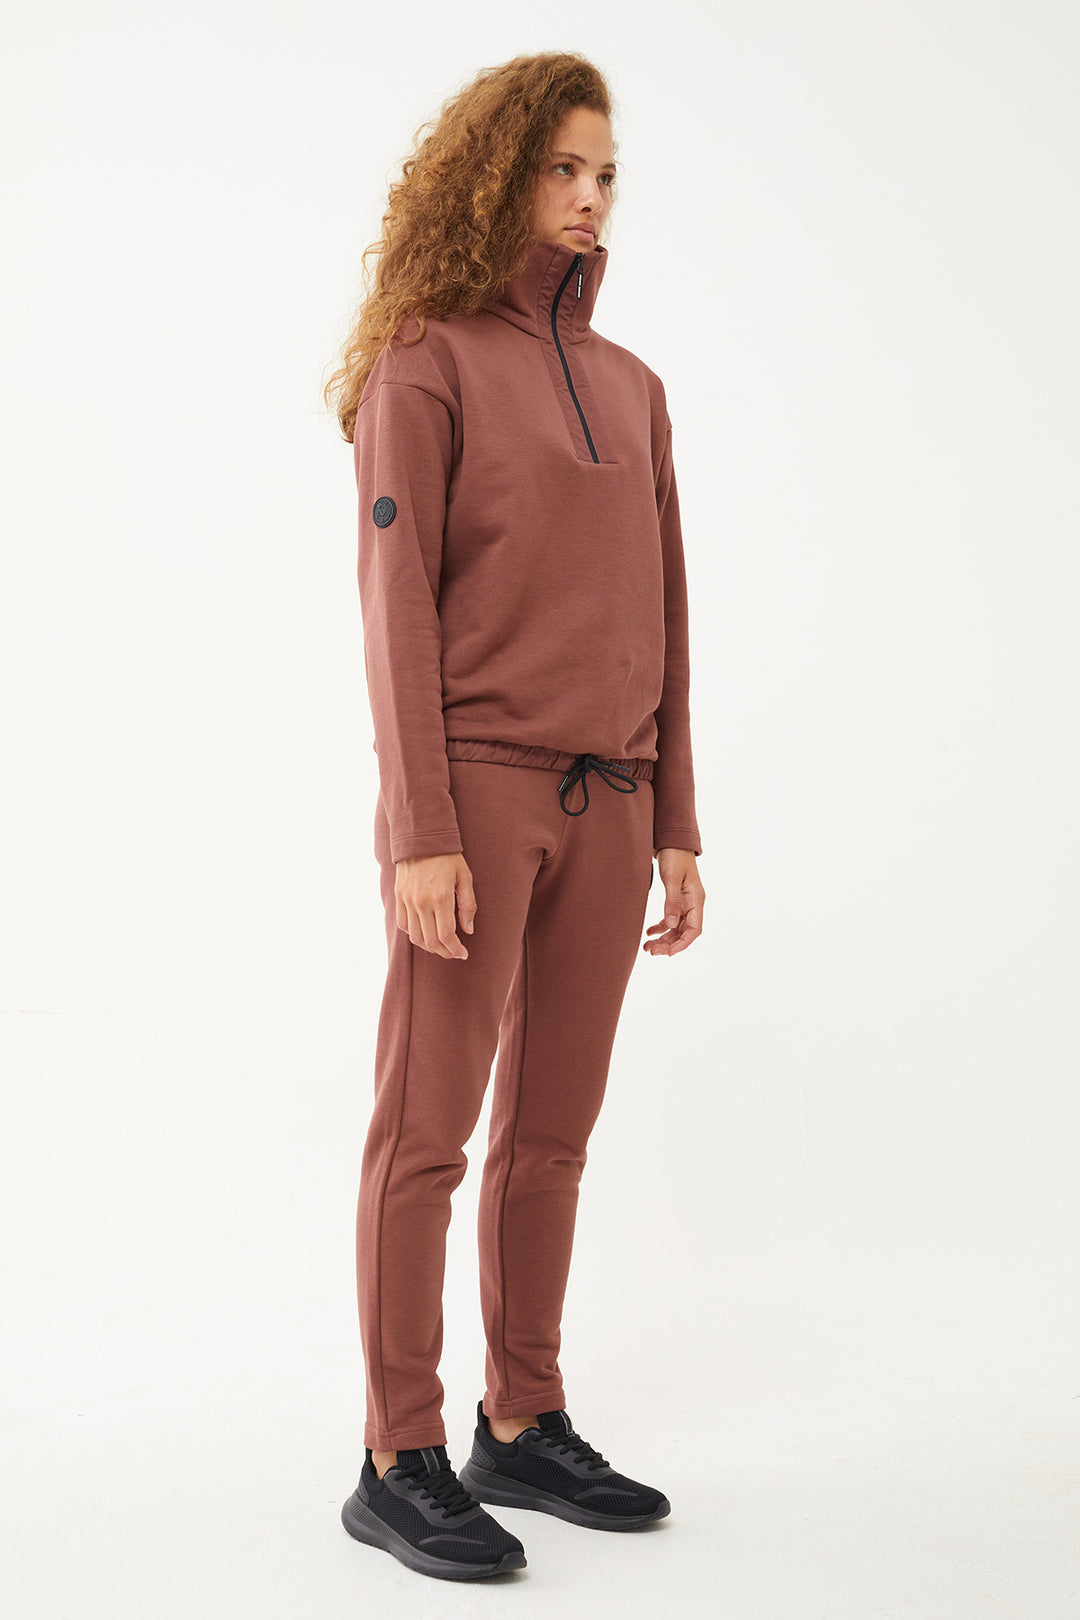 Damen-Sweatshirt-Trainingsanzug mit halbem Reißverschluss